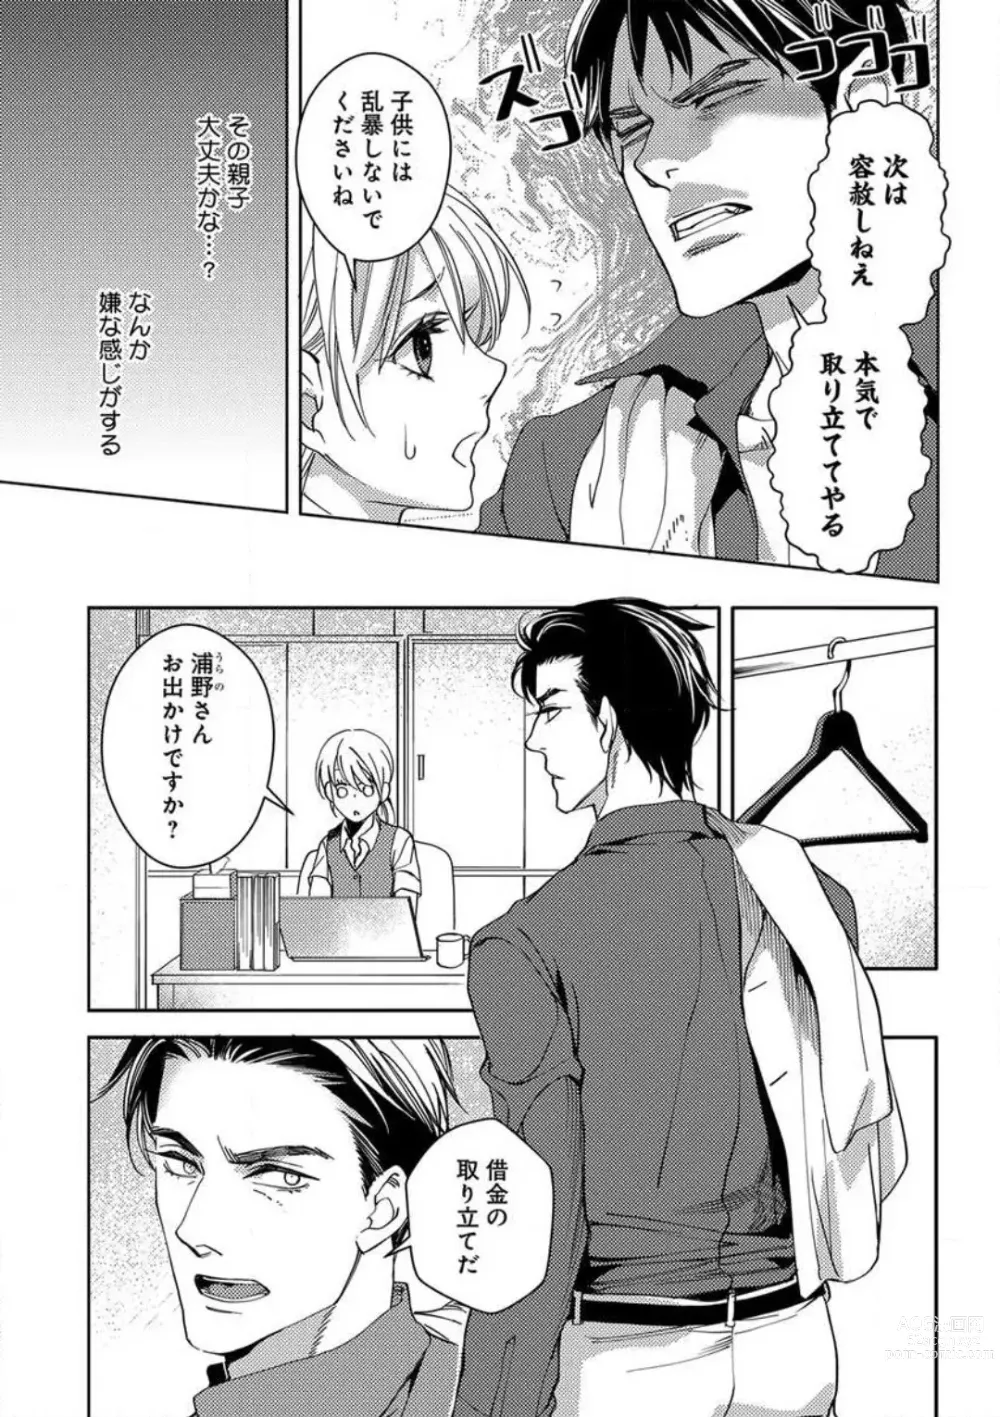 Page 9 of manga Kowamote Zetsurin Joushi to Dekiai Office H